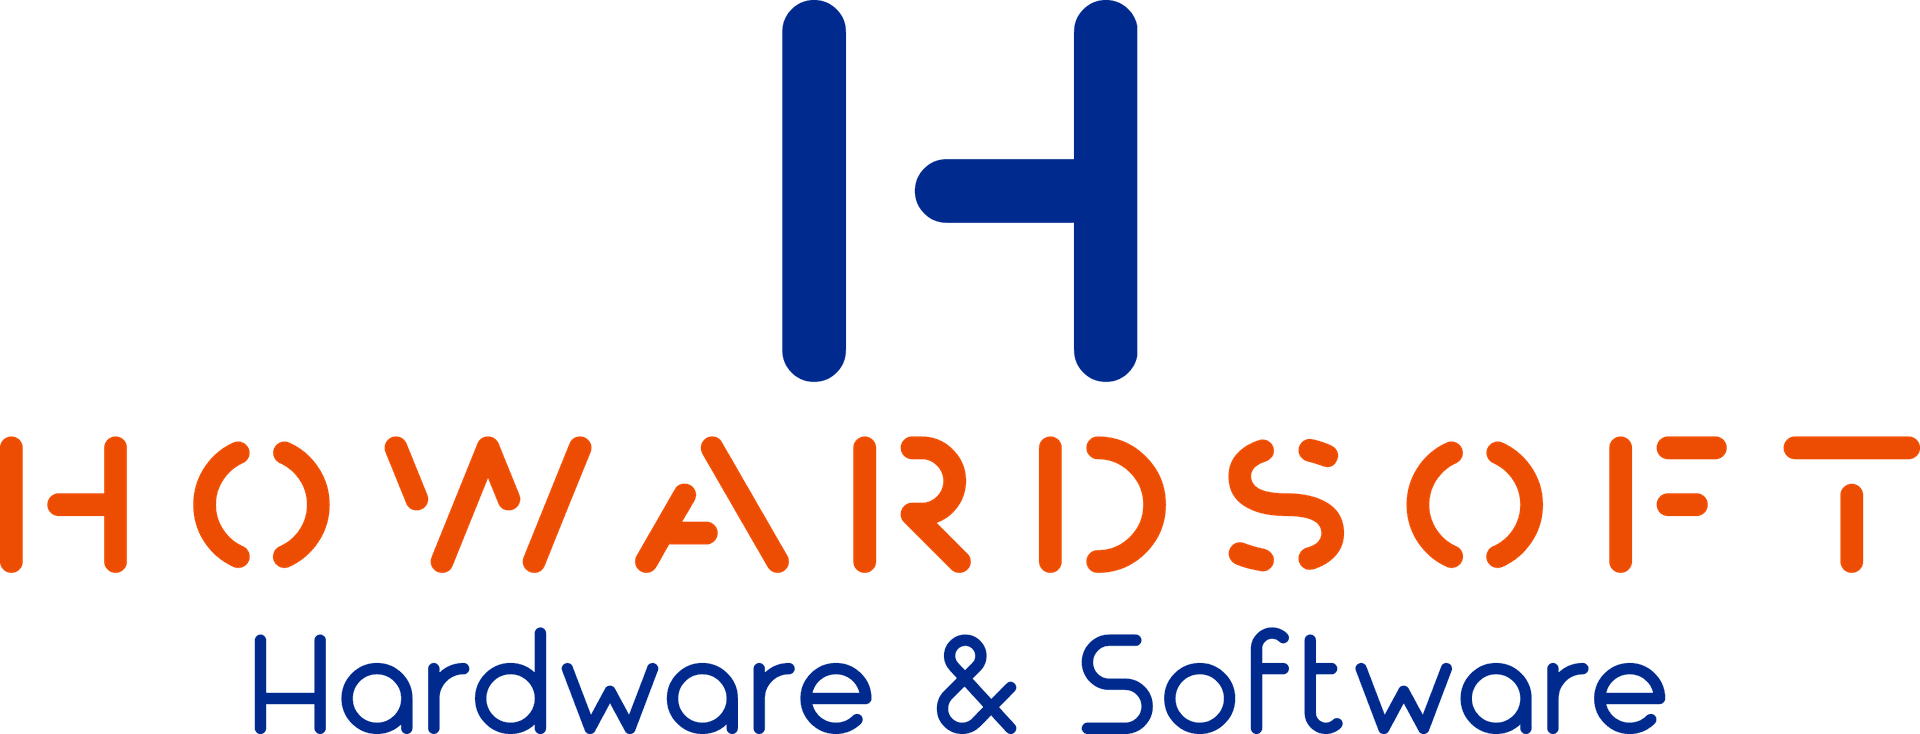 HowardSoft - Hardware & Software